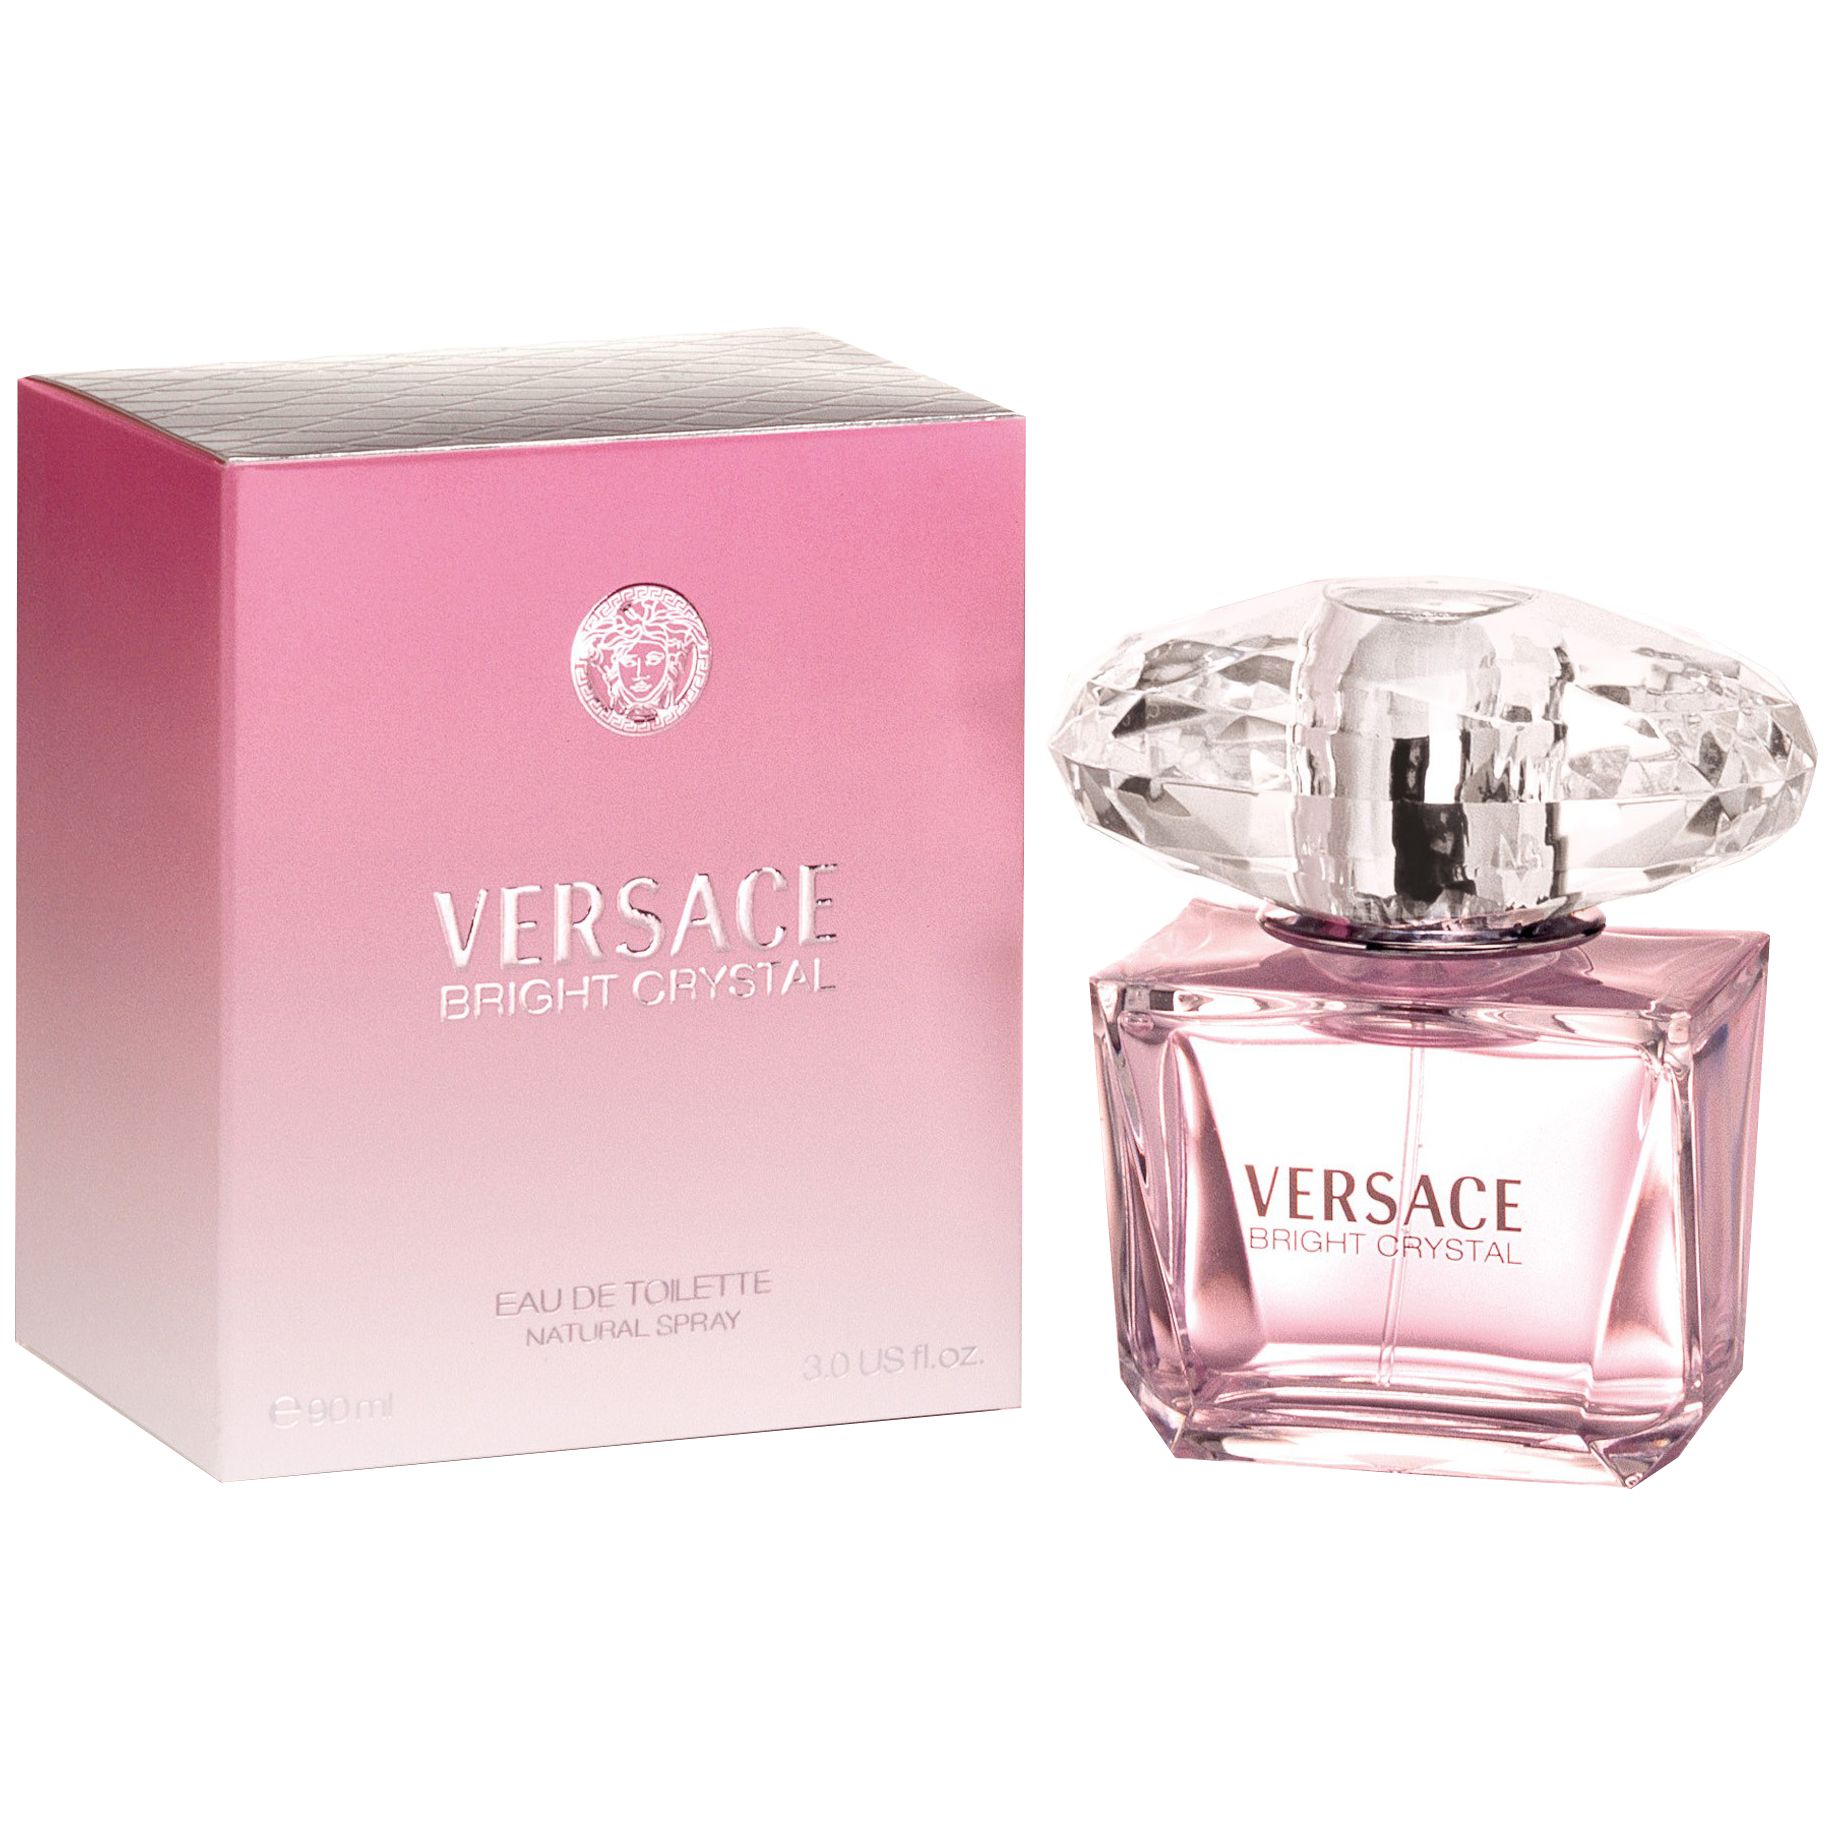 versace bright crystal perfume 50ml